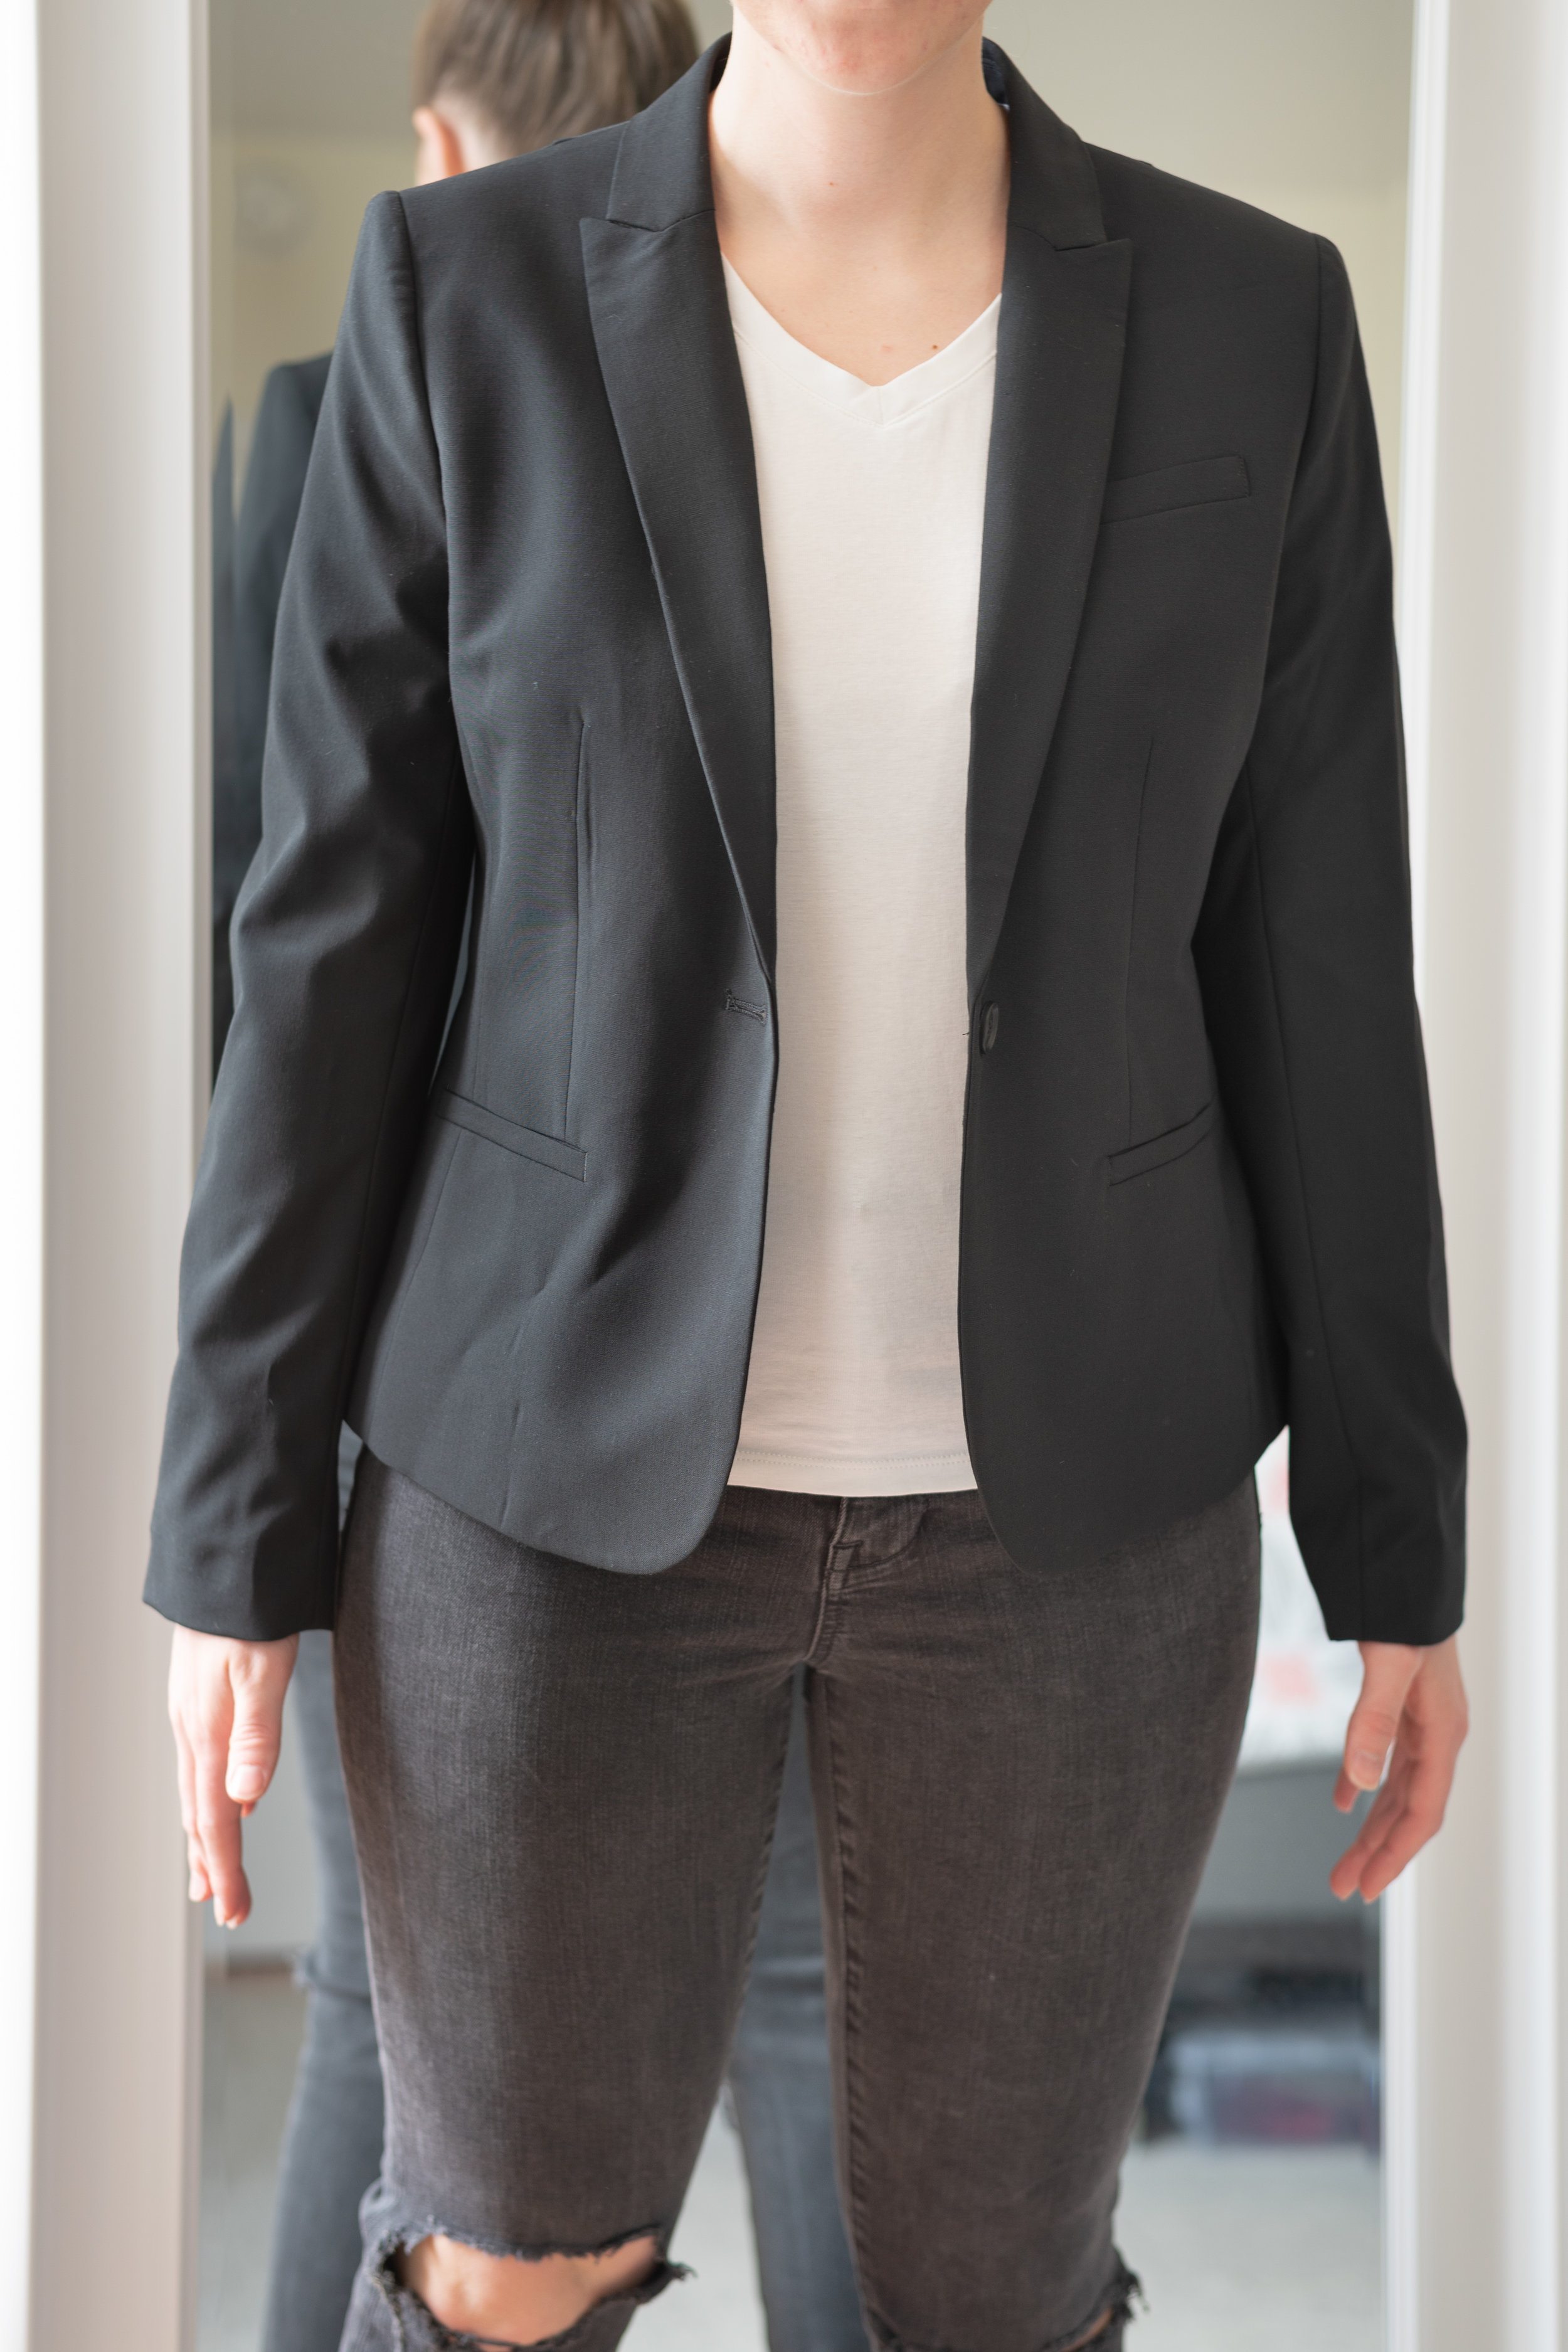 DFBB Women Long Sleeve Pure Color Midi Outerwear Loose Fit Blazer Jacket Suit Coat 